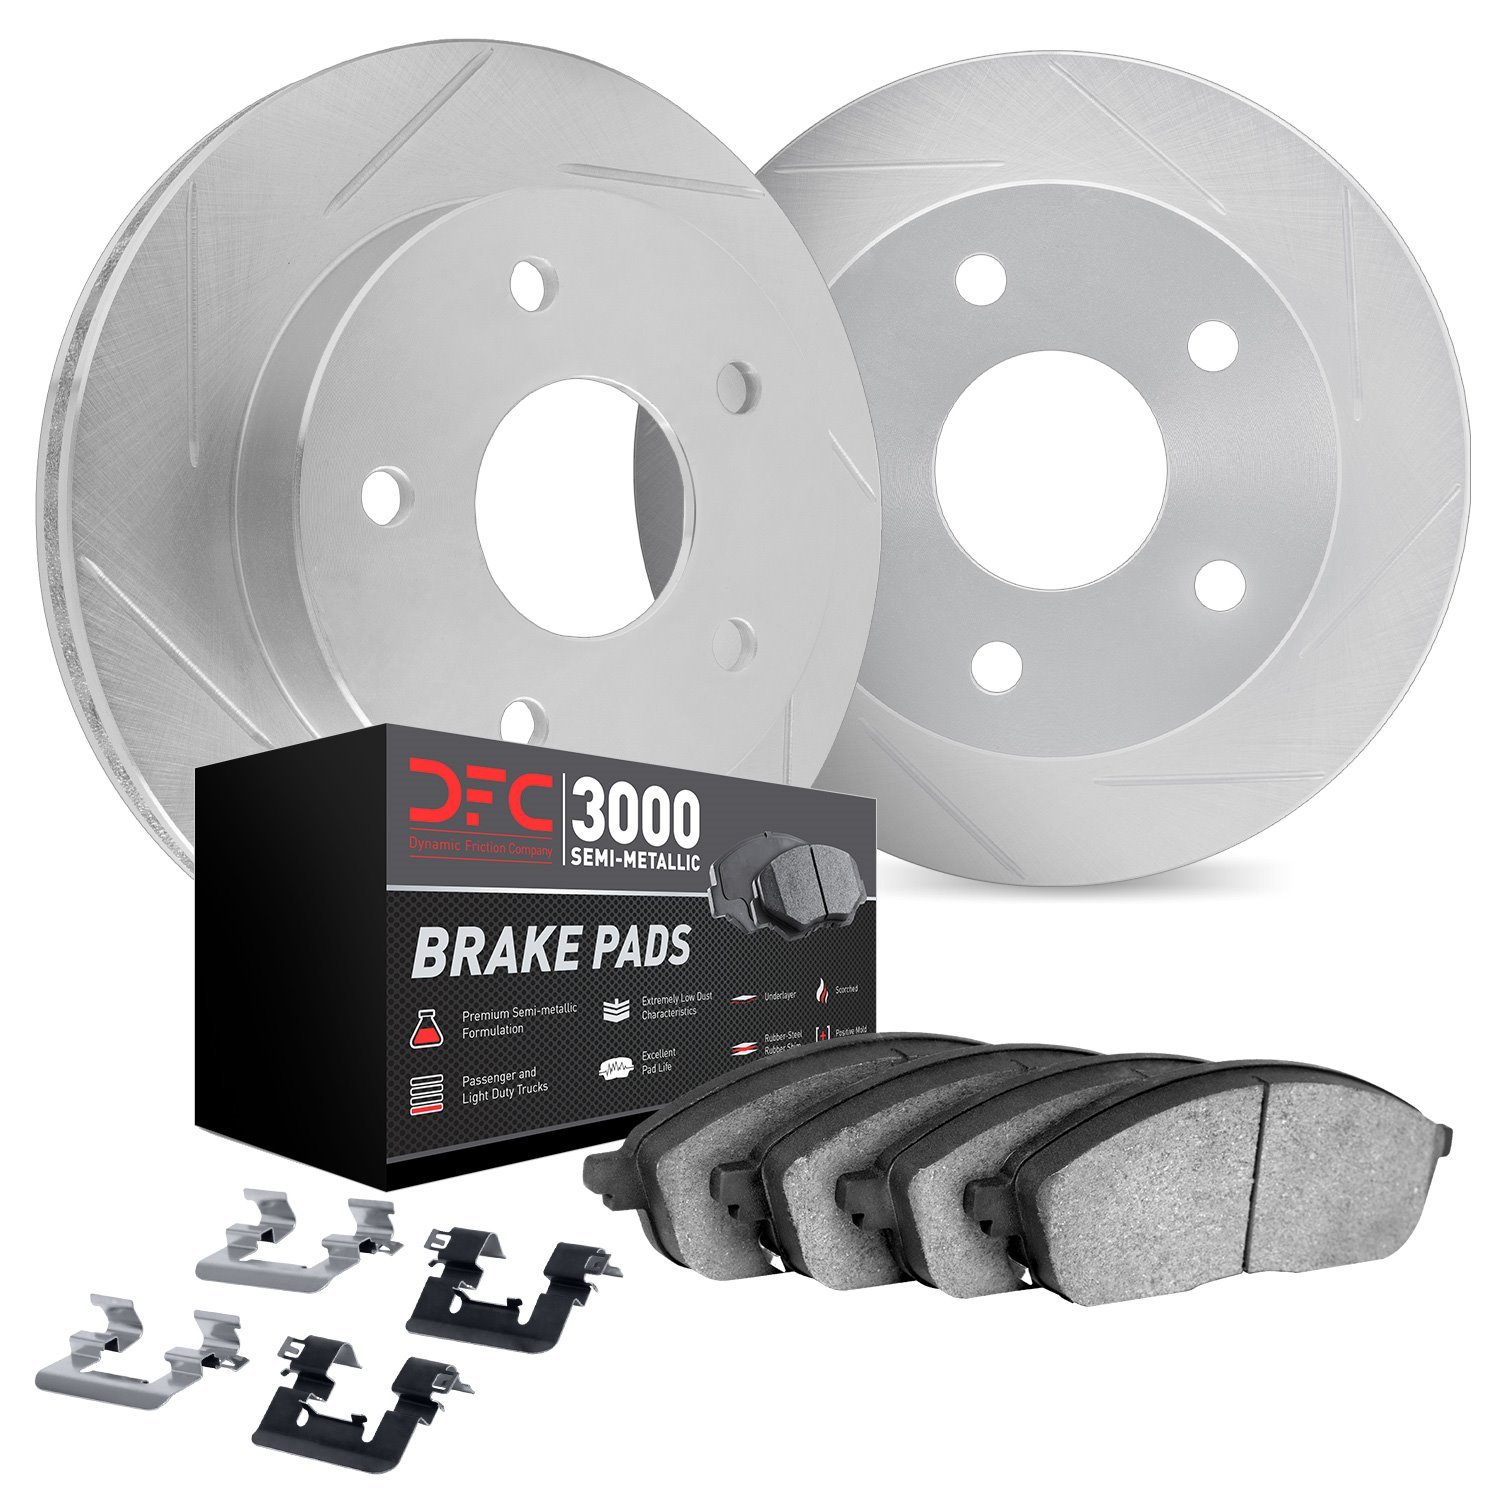 5112-59065 Slotted Brake Rotors with 3000-Series Semi-Metallic Brake Pads Kit & Hardware [Silver], 2002-2015 Acura/Honda, Positi